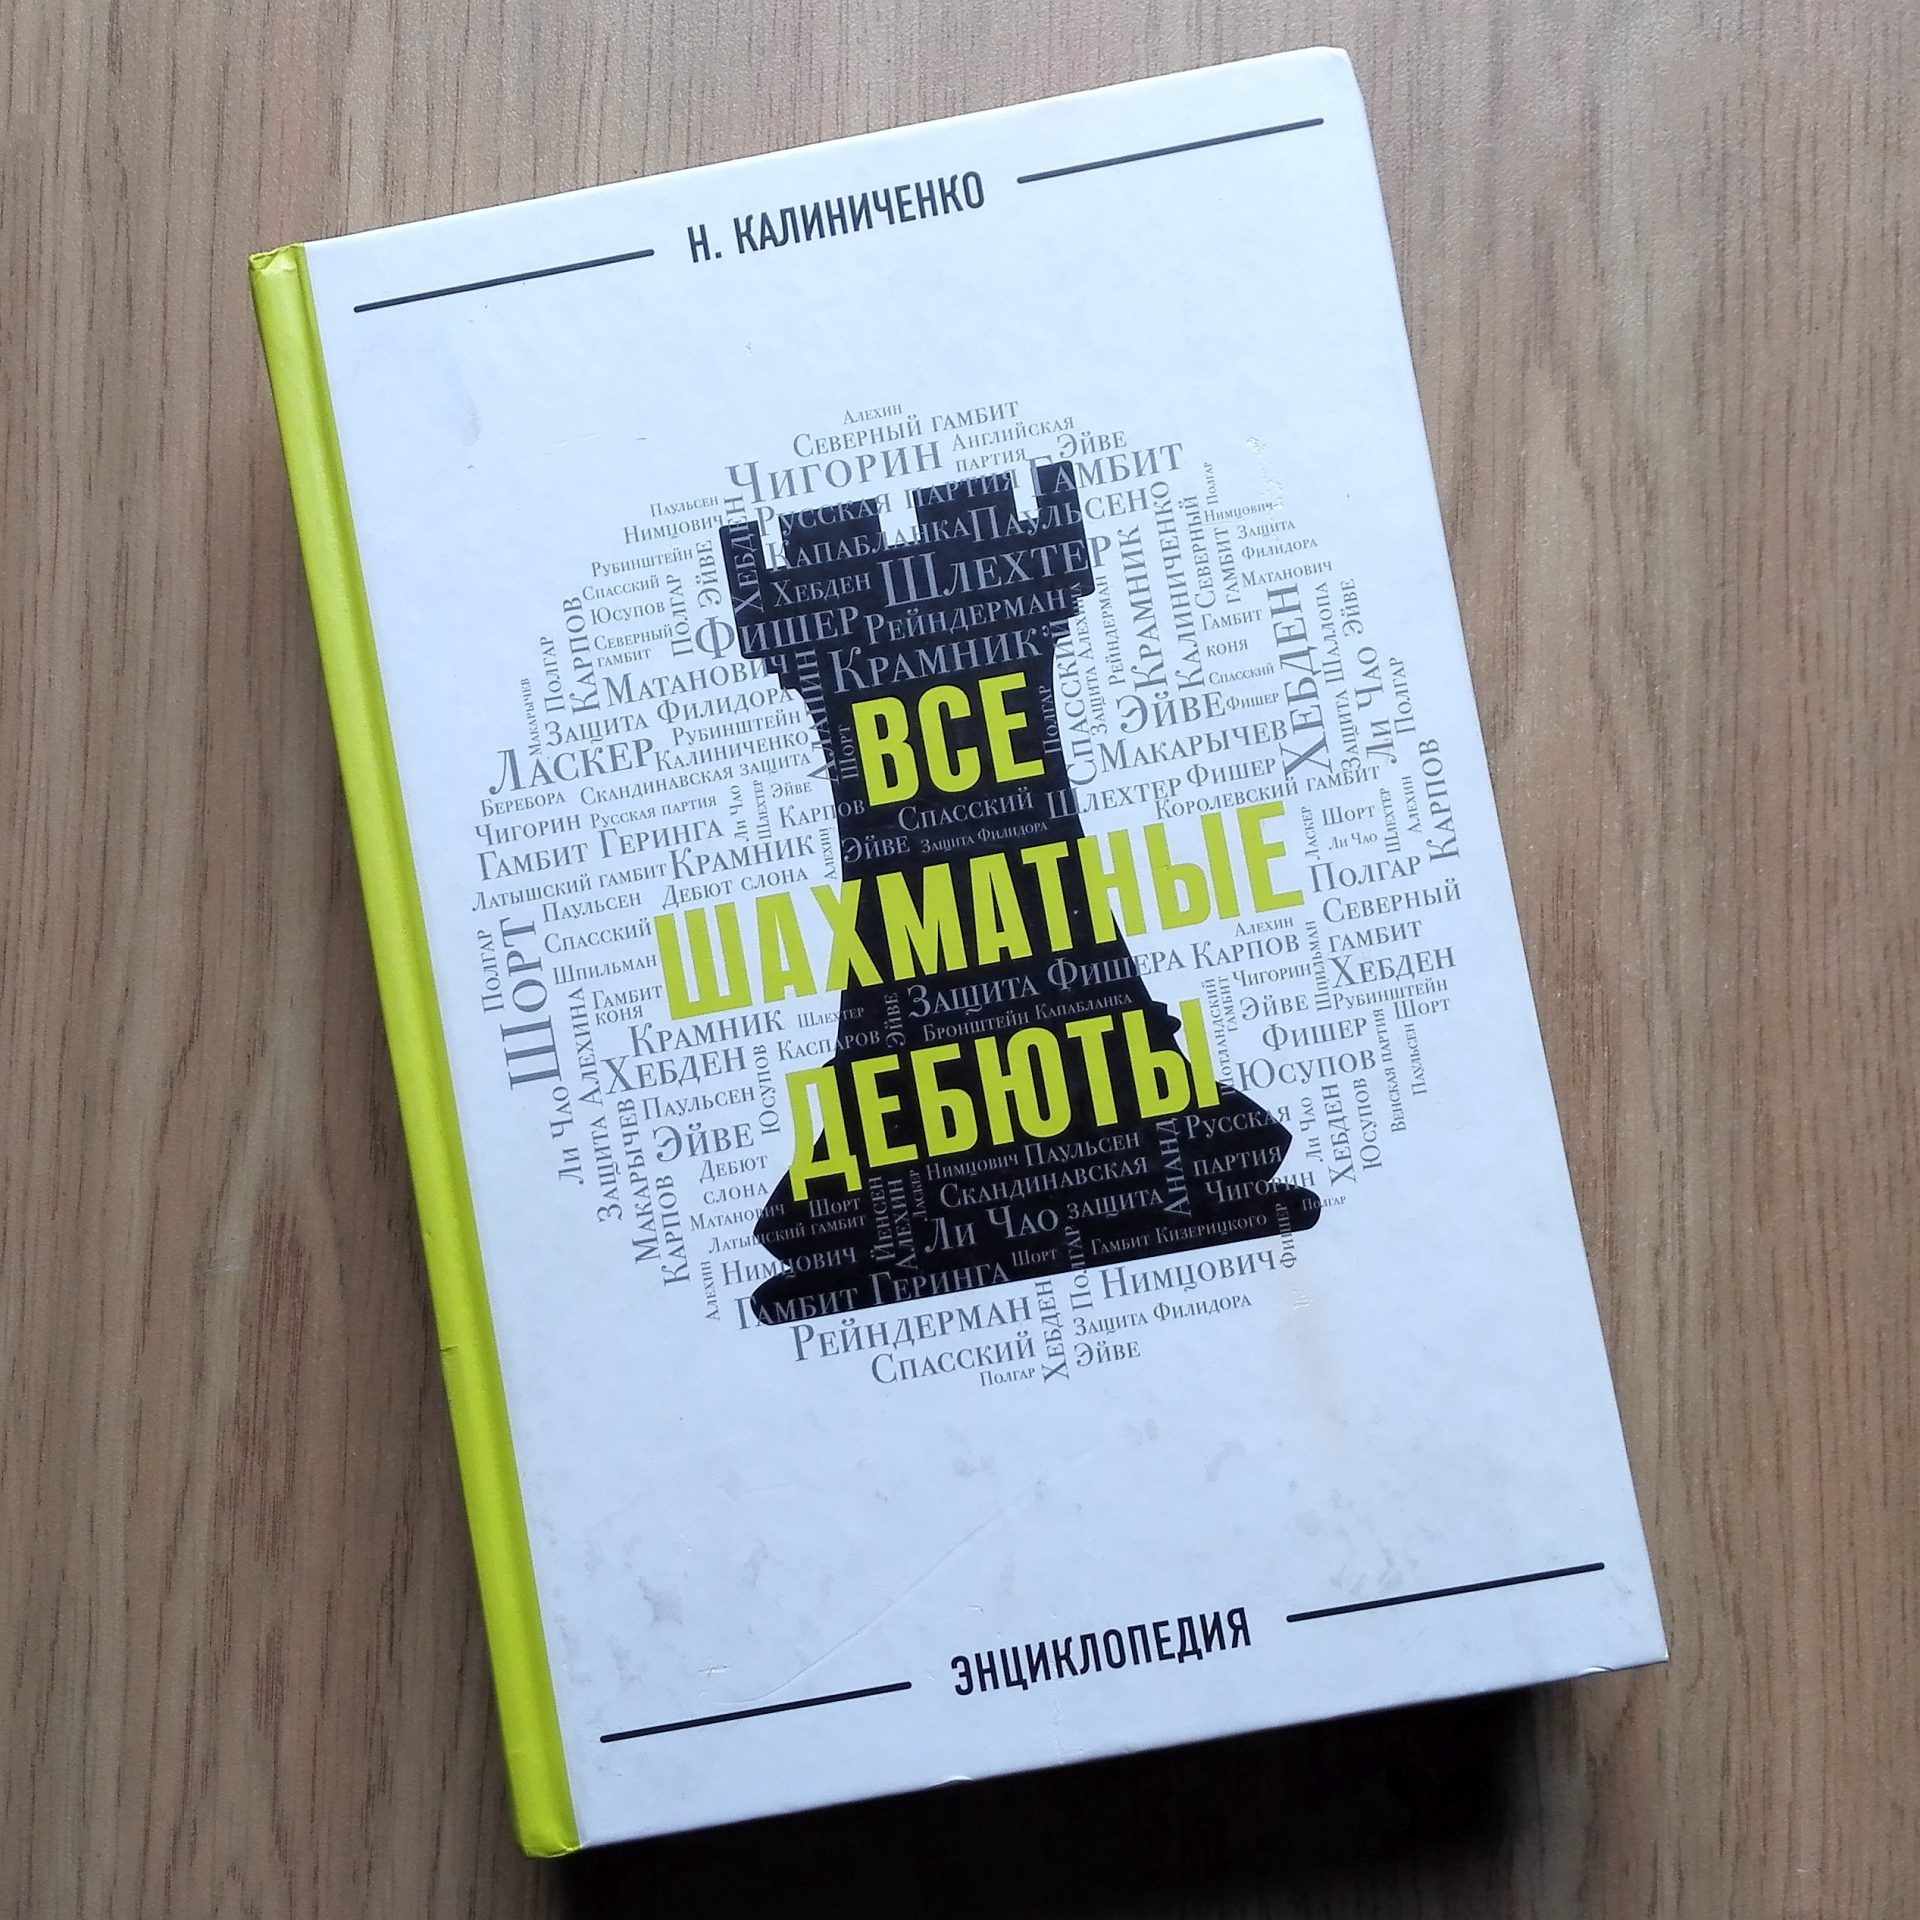 nikolay kalinichenko chess books